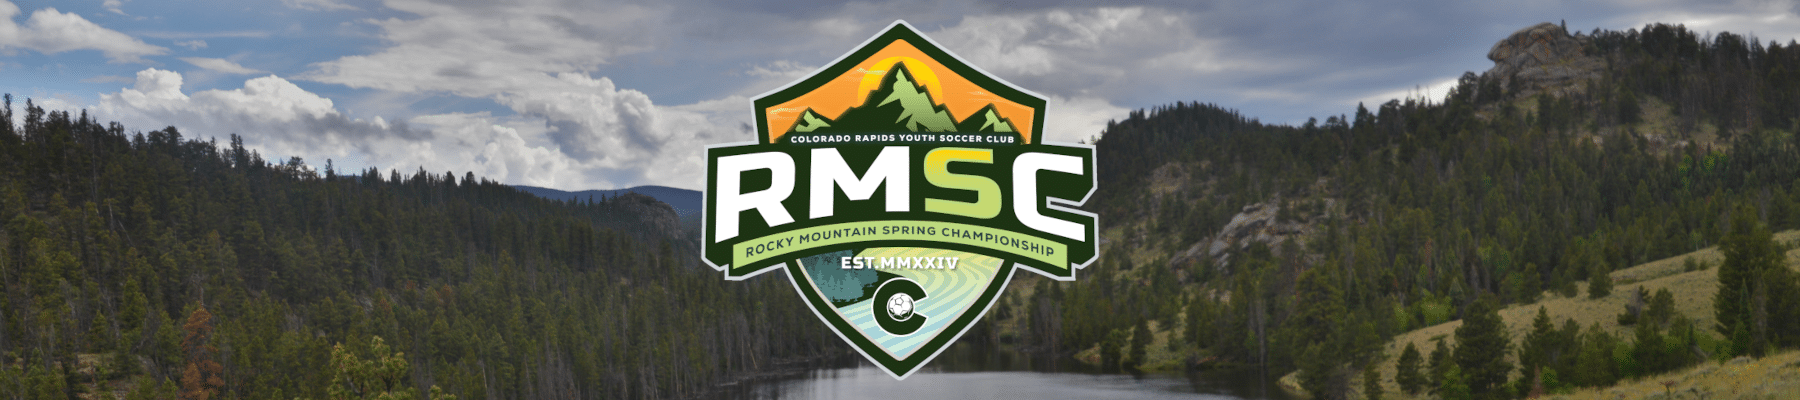 Rmsc banner 24